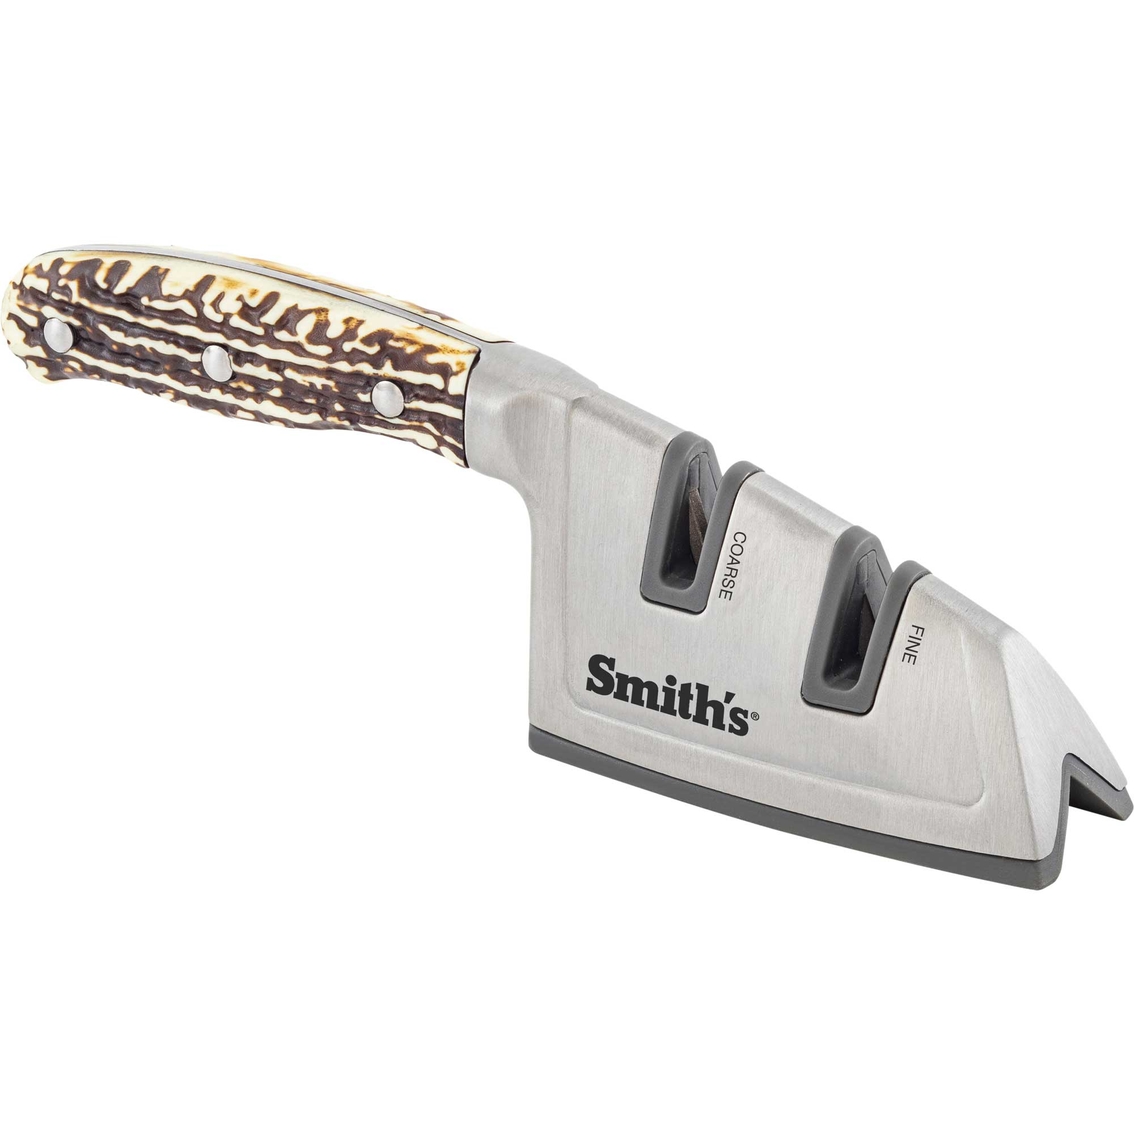 Smith's Housewares Electric Knife Sharpener, Deluxe Diamond